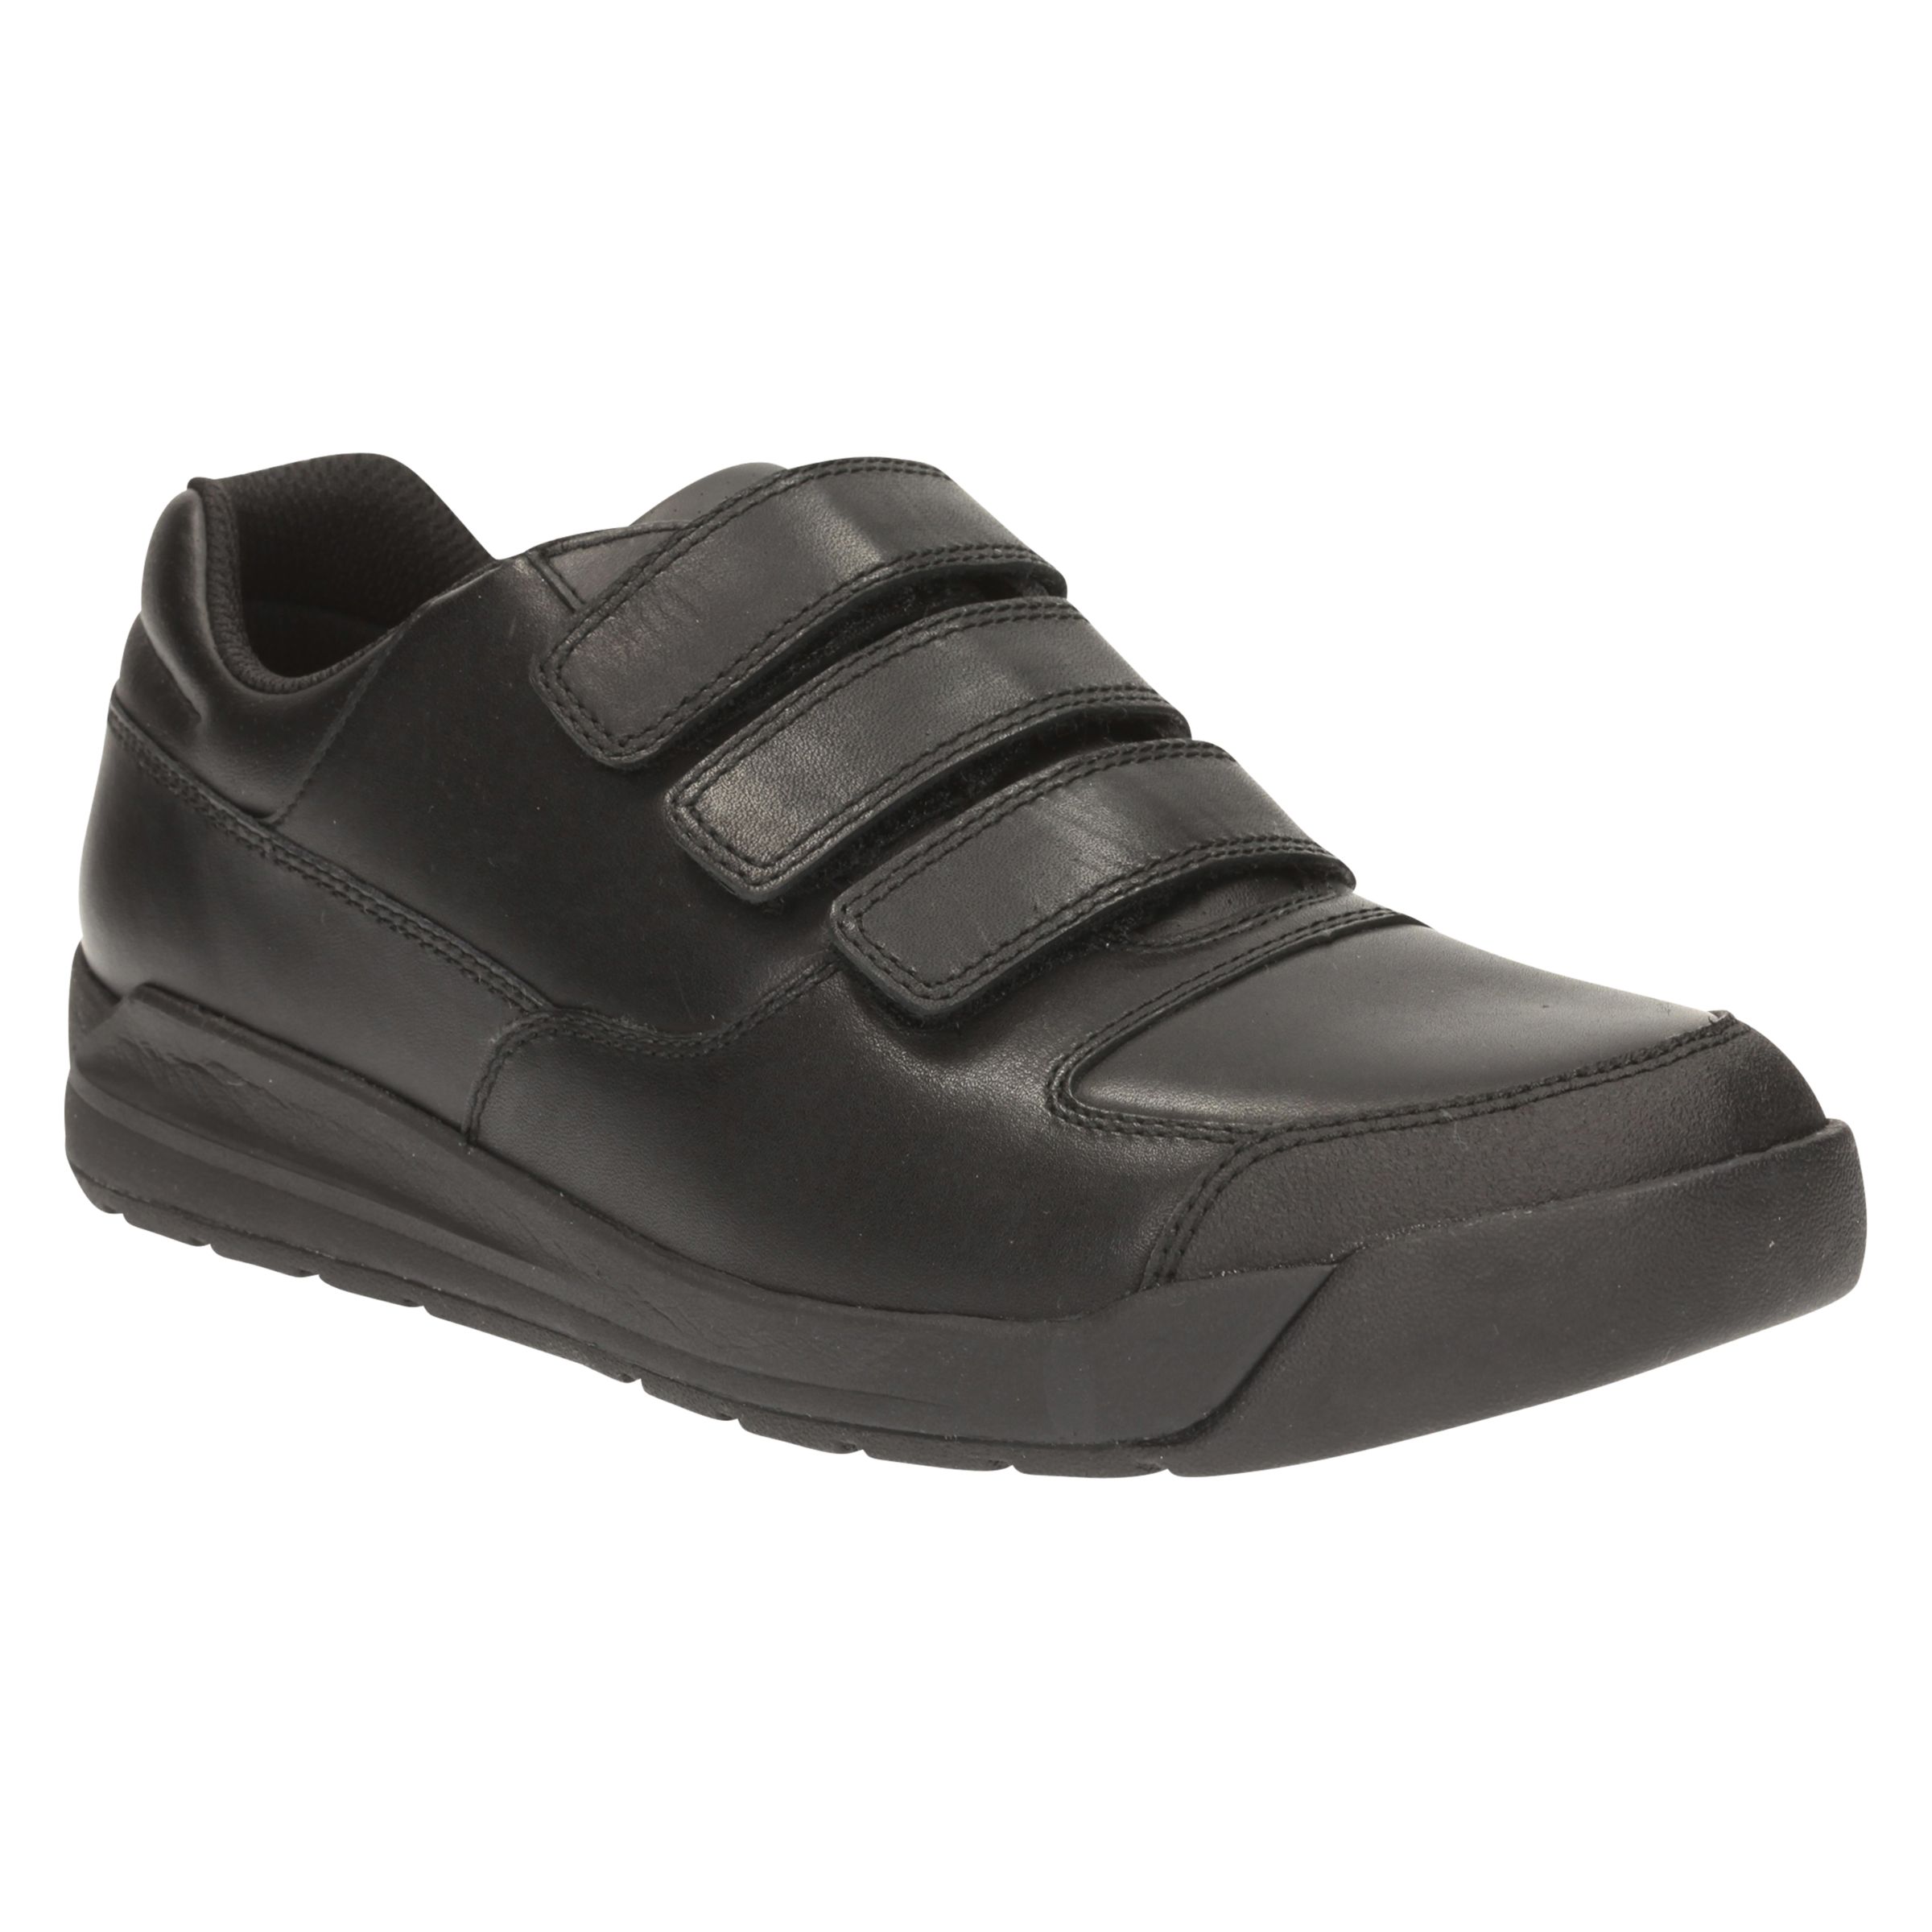 Monte Lite Leather School Shoes, Black 